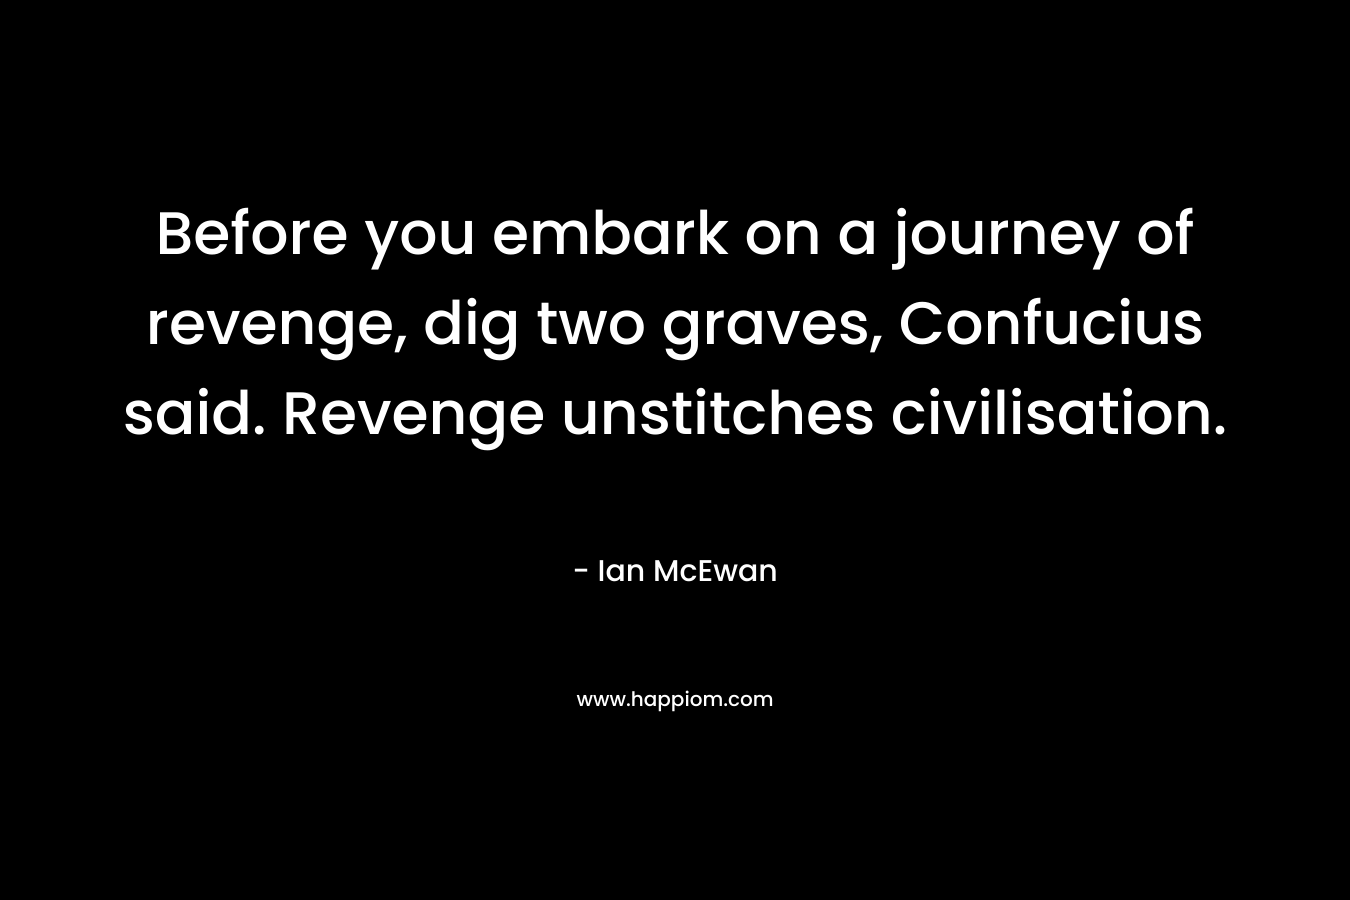 Before you embark on a journey of revenge, dig two graves, Confucius said. Revenge unstitches civilisation. – Ian McEwan